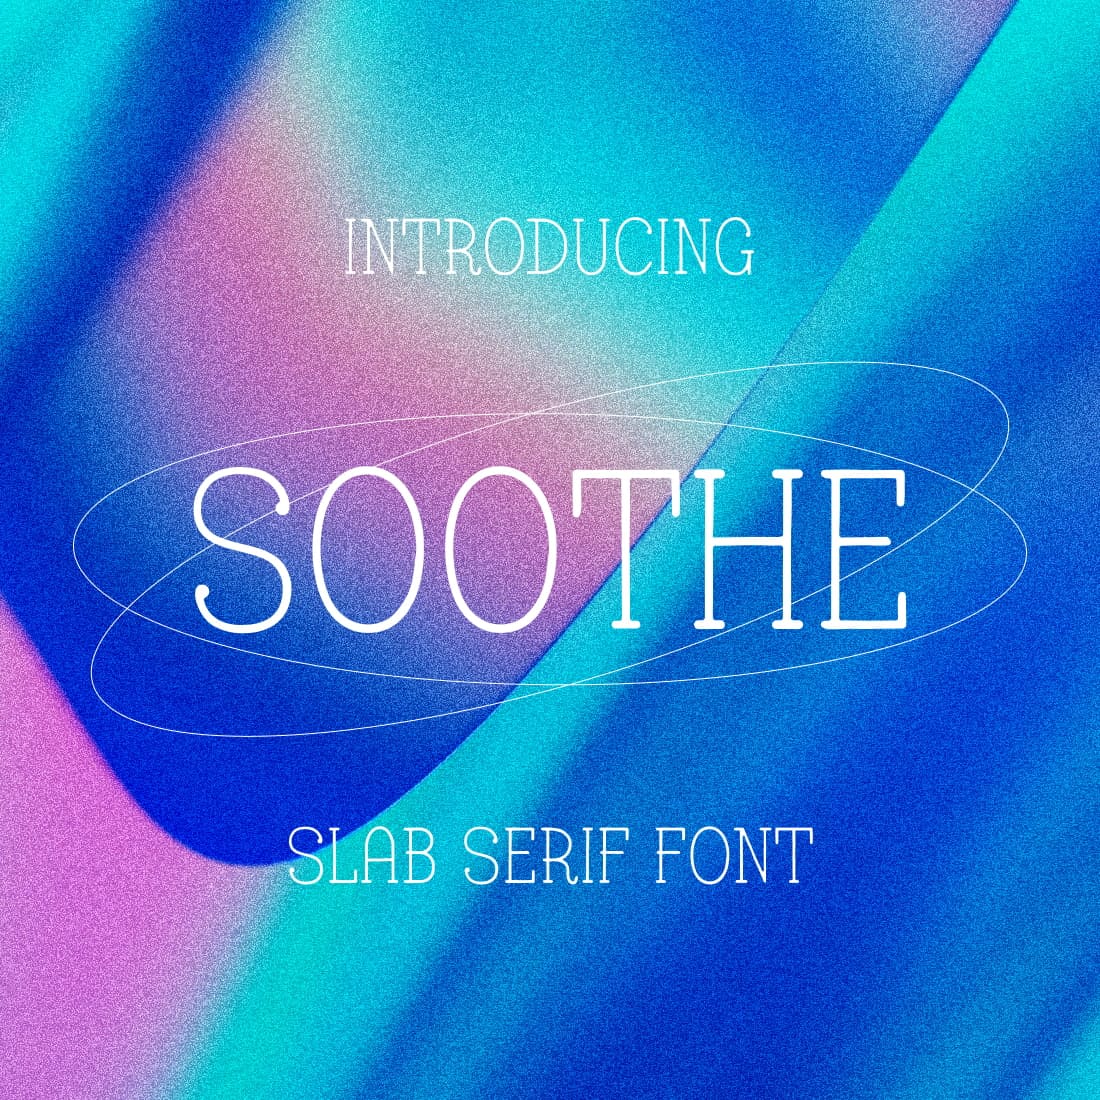 Soothe Slab Serif Font main cover by MasterBundles.